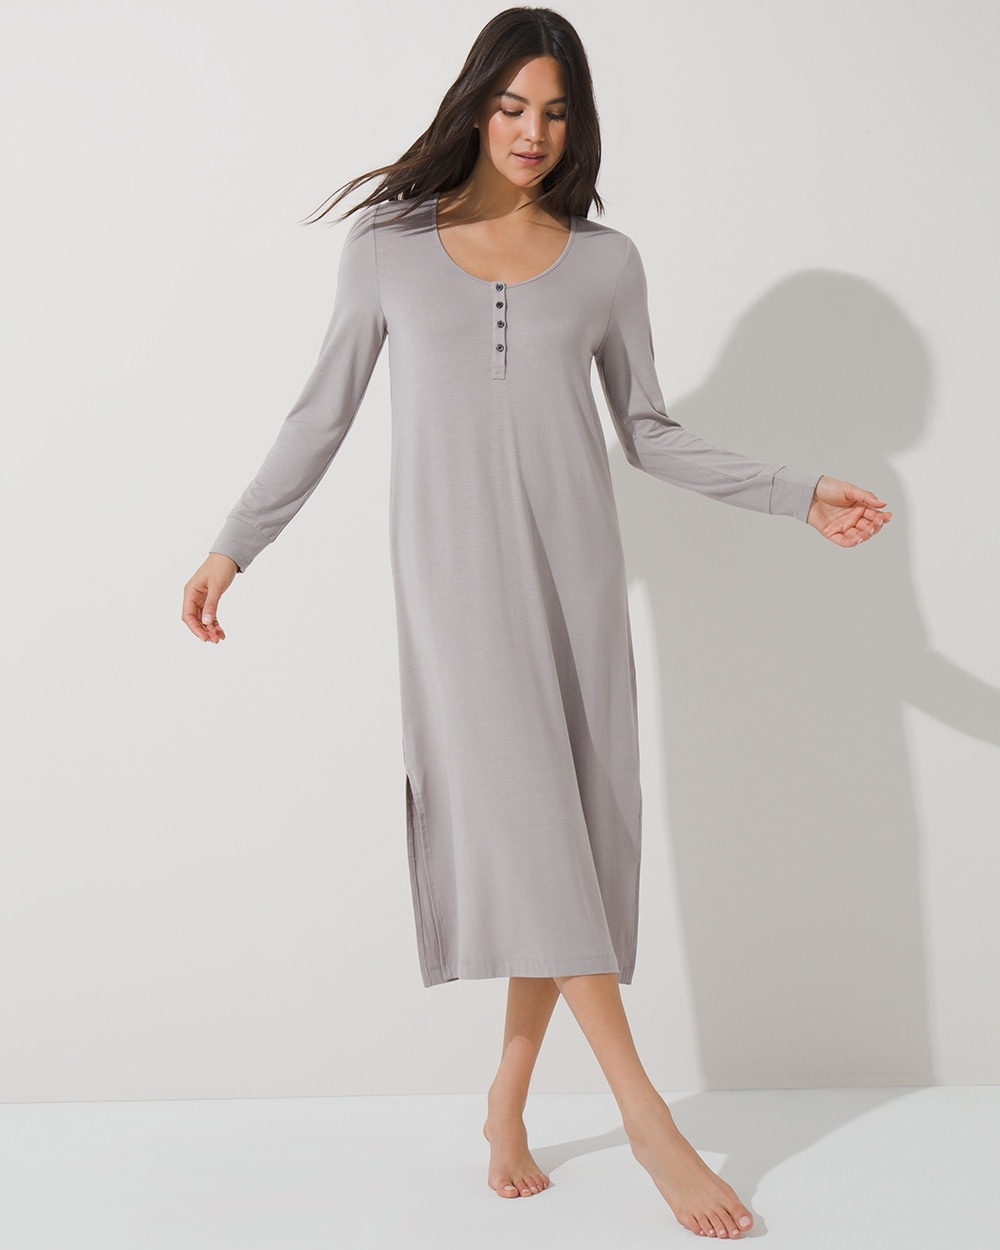 H HIAMIGOS Cotton Shelf Bra Nightgown Sleepwear Sleep Shirt